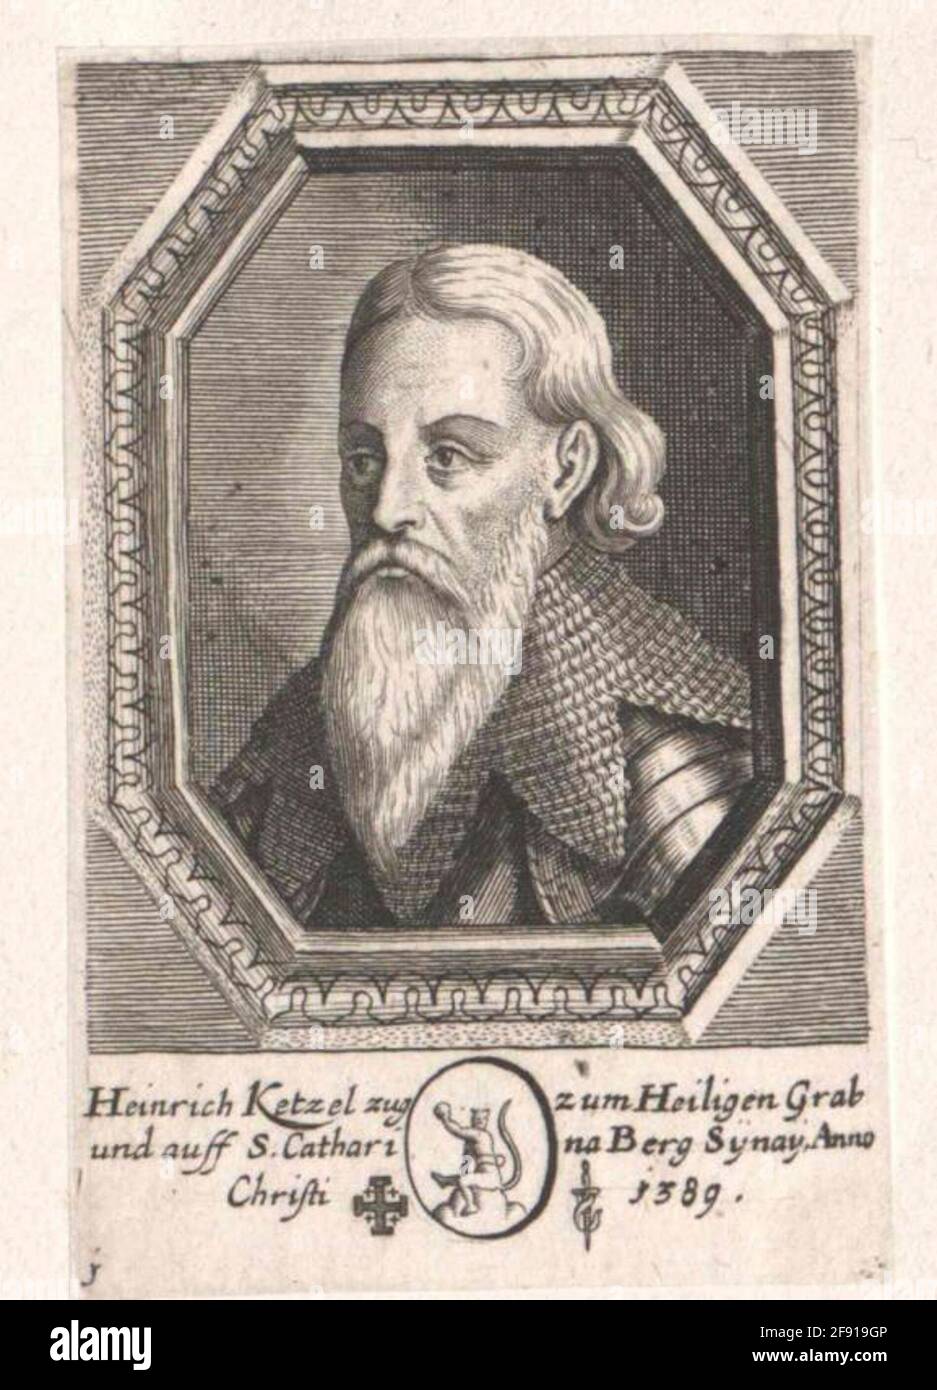 Ketzel, Heinrich. Stock Photo